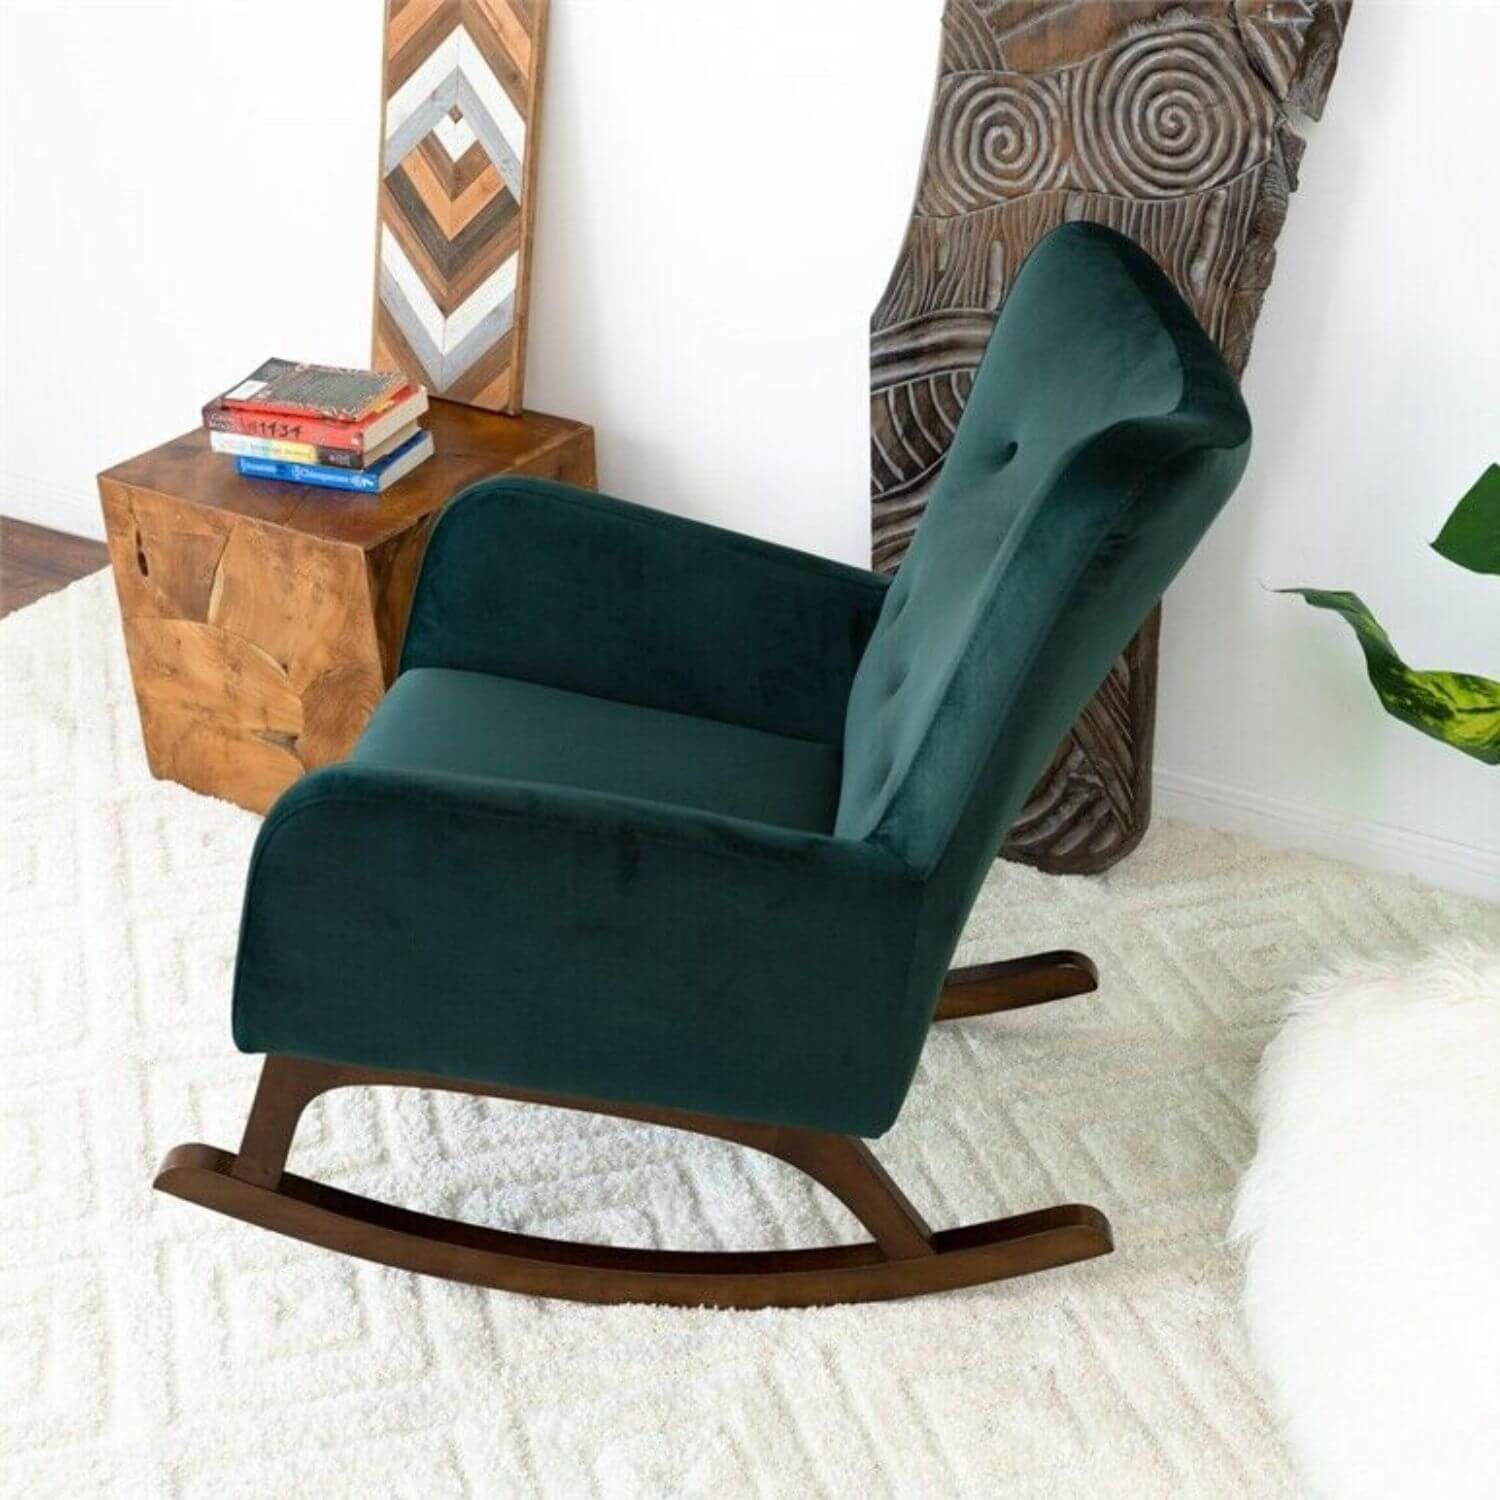 Ashcroft Alexa Green Velvet Fabric Nursery Rocking Chair - Lifestyle